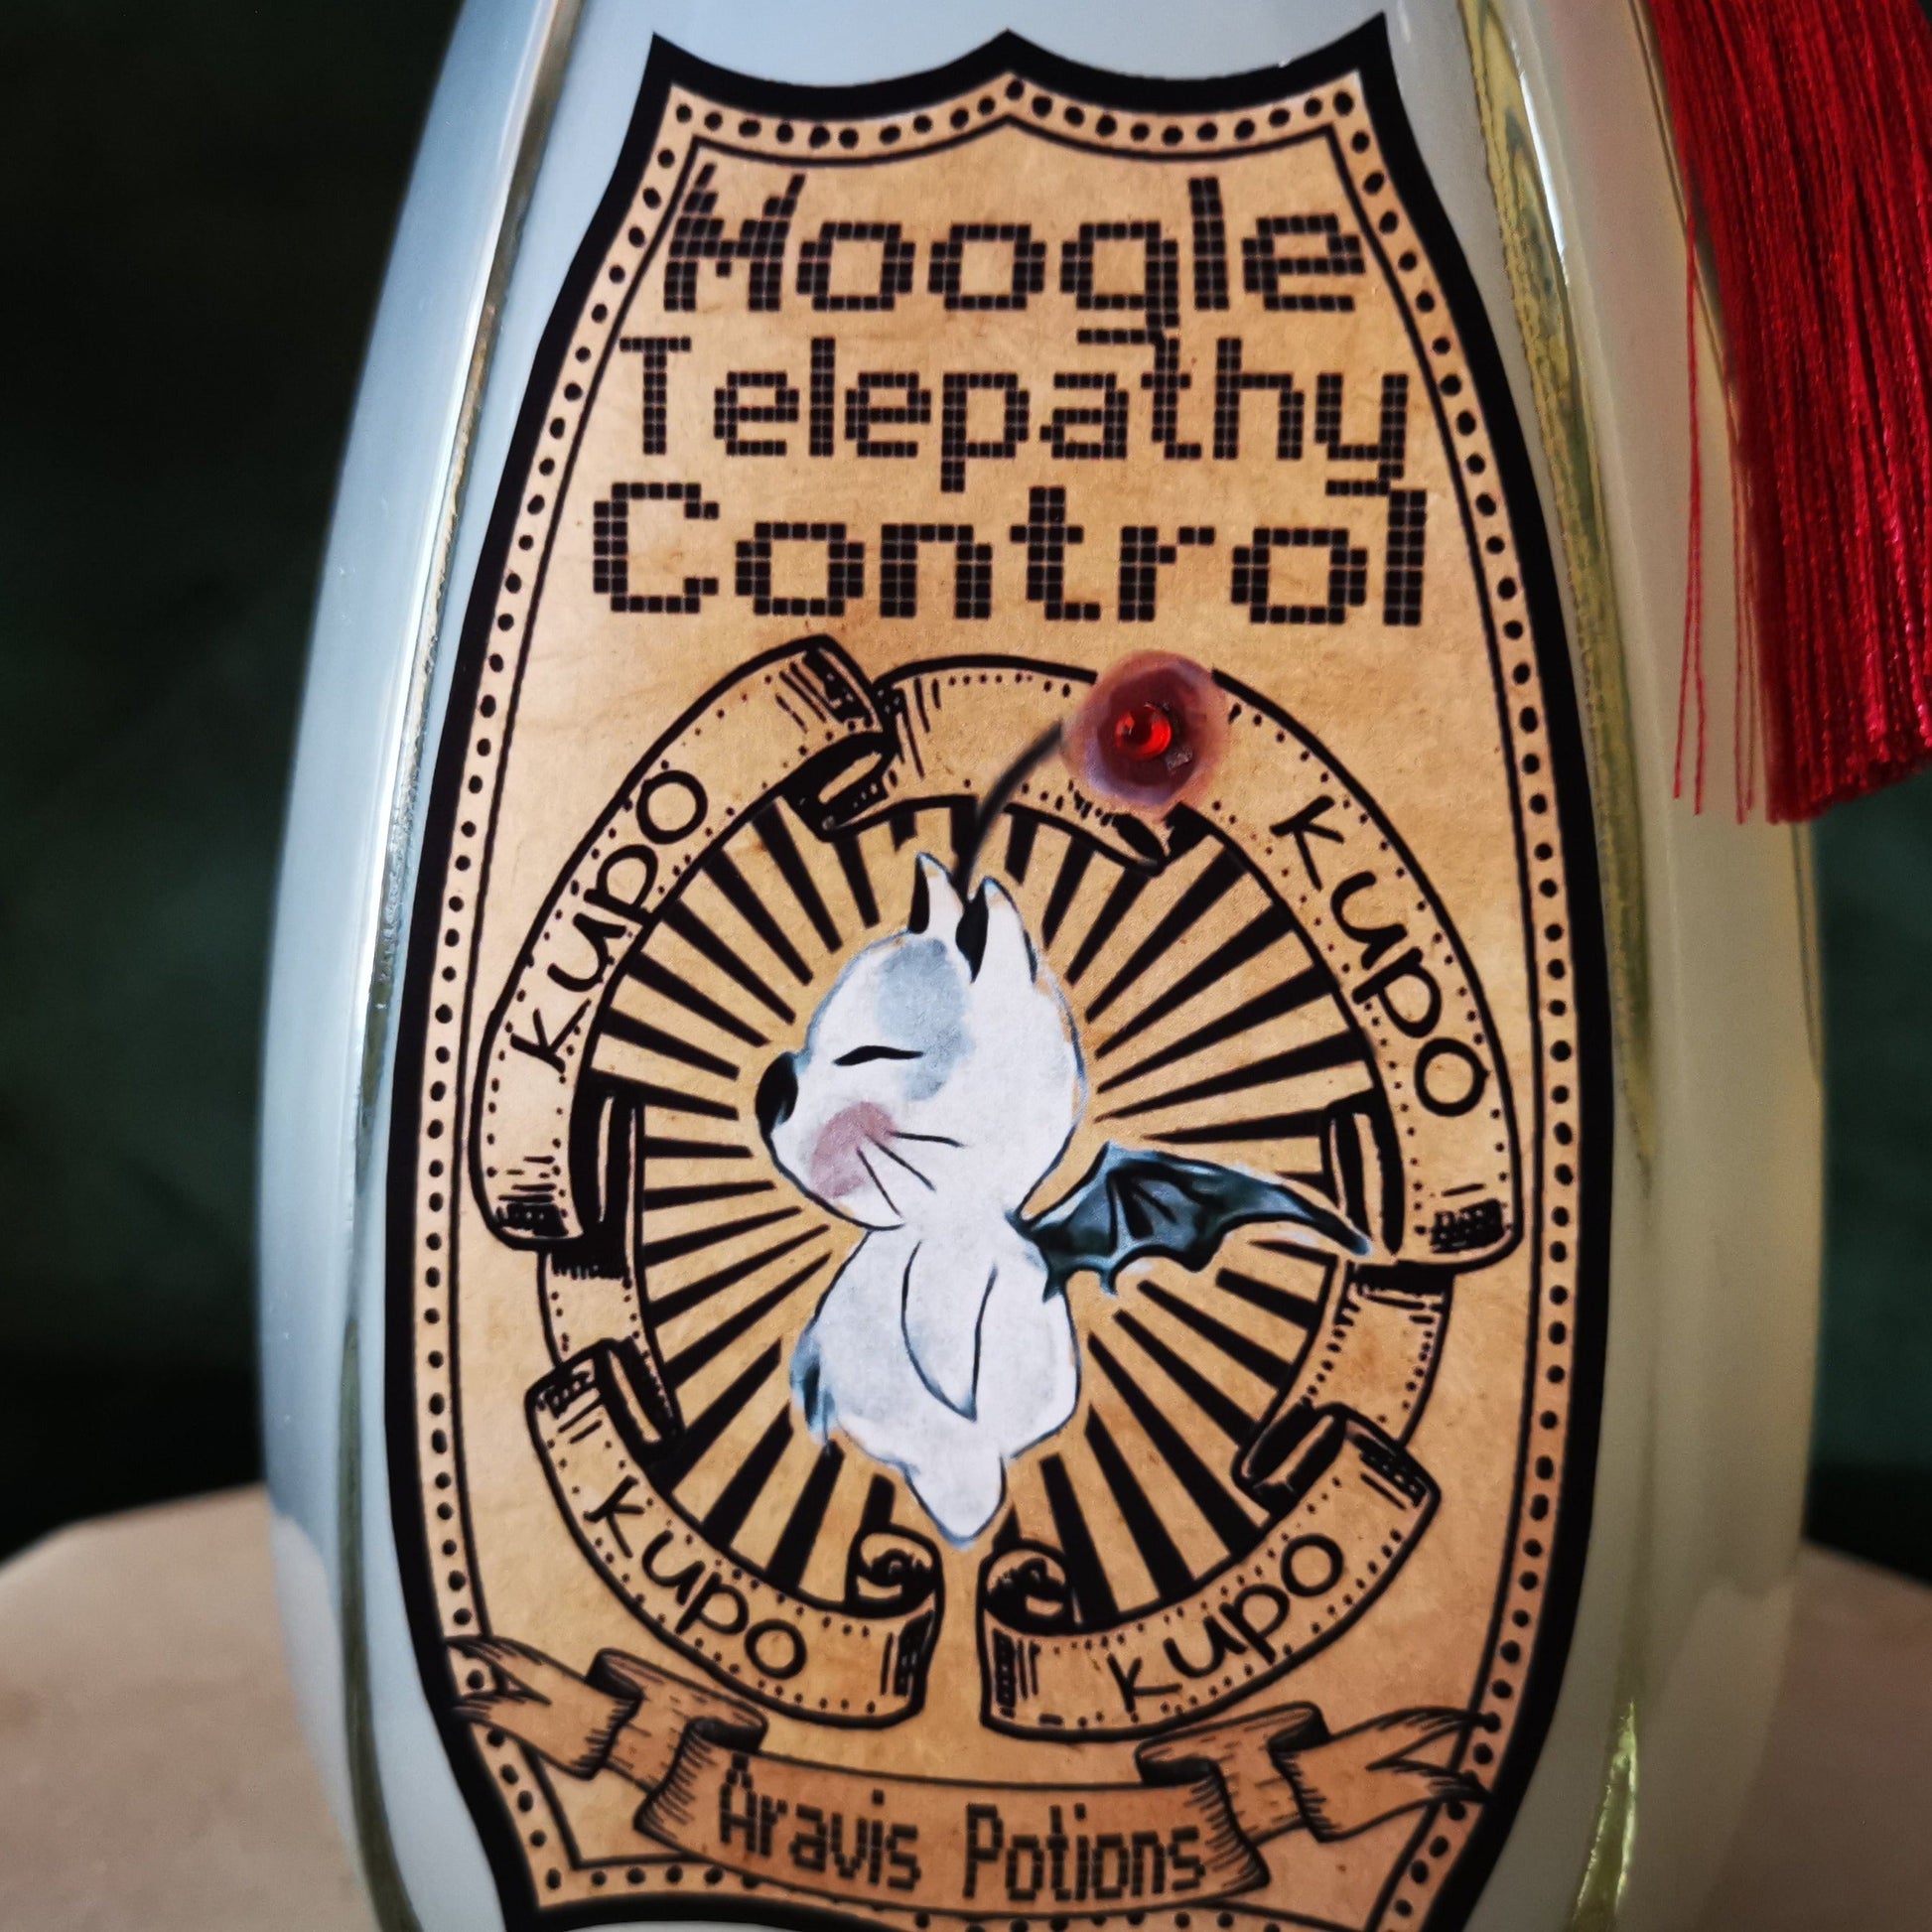 Kupo - Moogle Telepathy Control - Potions Aravis Potions Apothecary Harry Potter